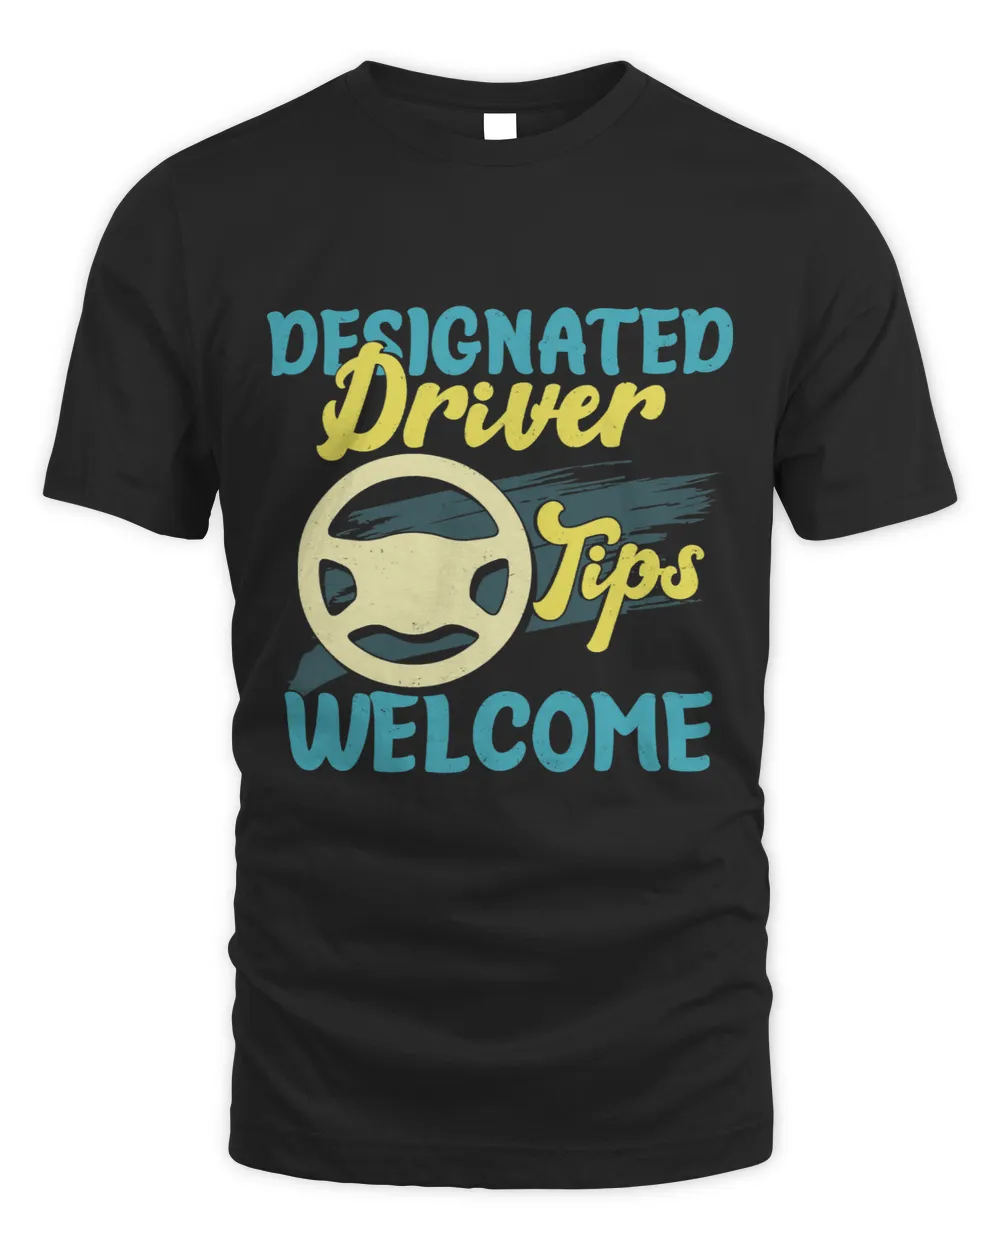 Designated Driver Design For Driving Volunteer